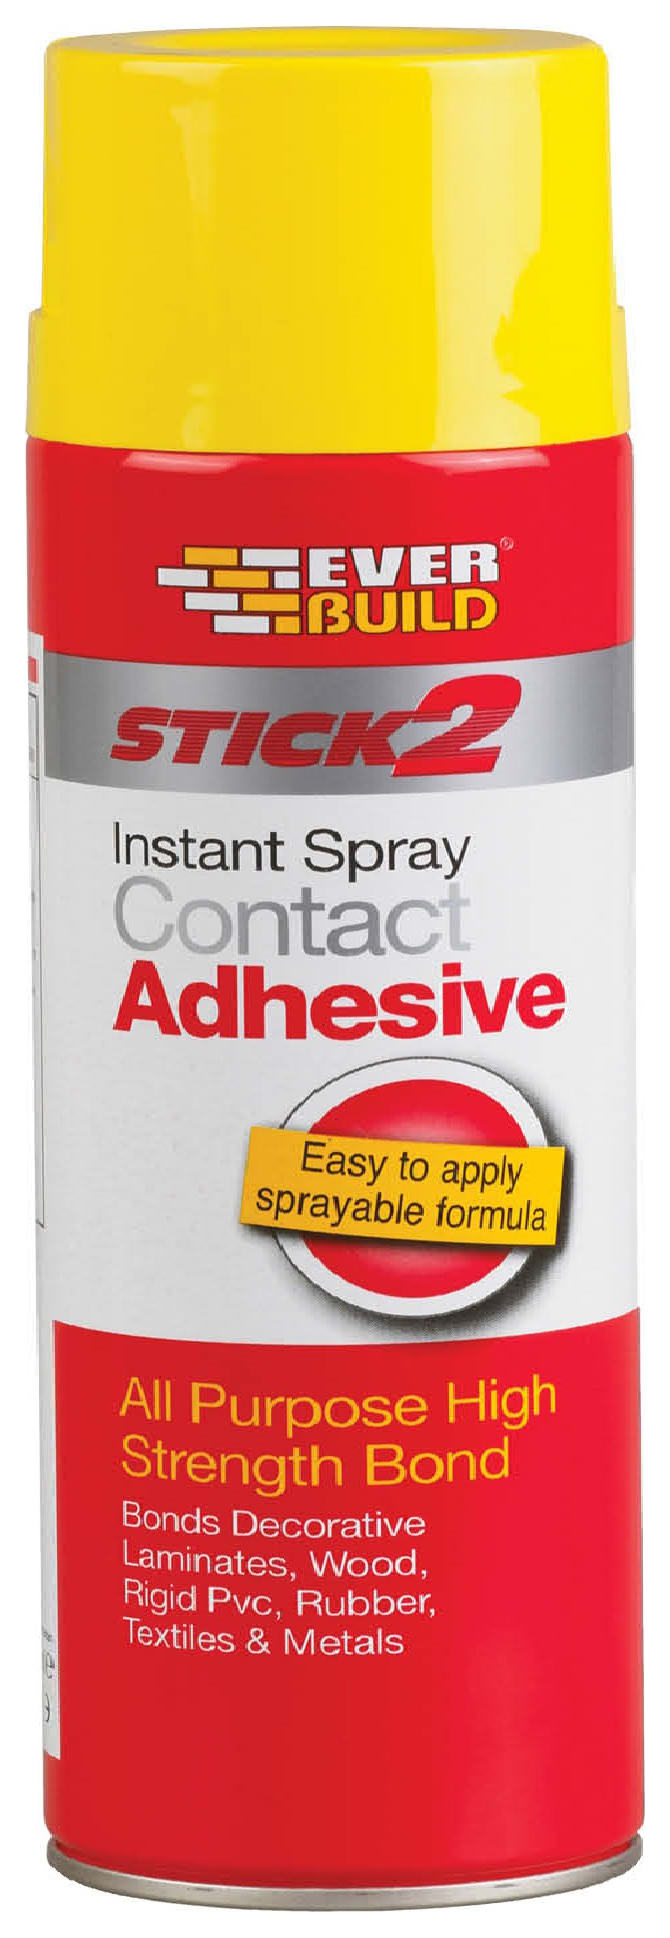 Everbuild Stick2 Contact Adhesive Spray - 500ml